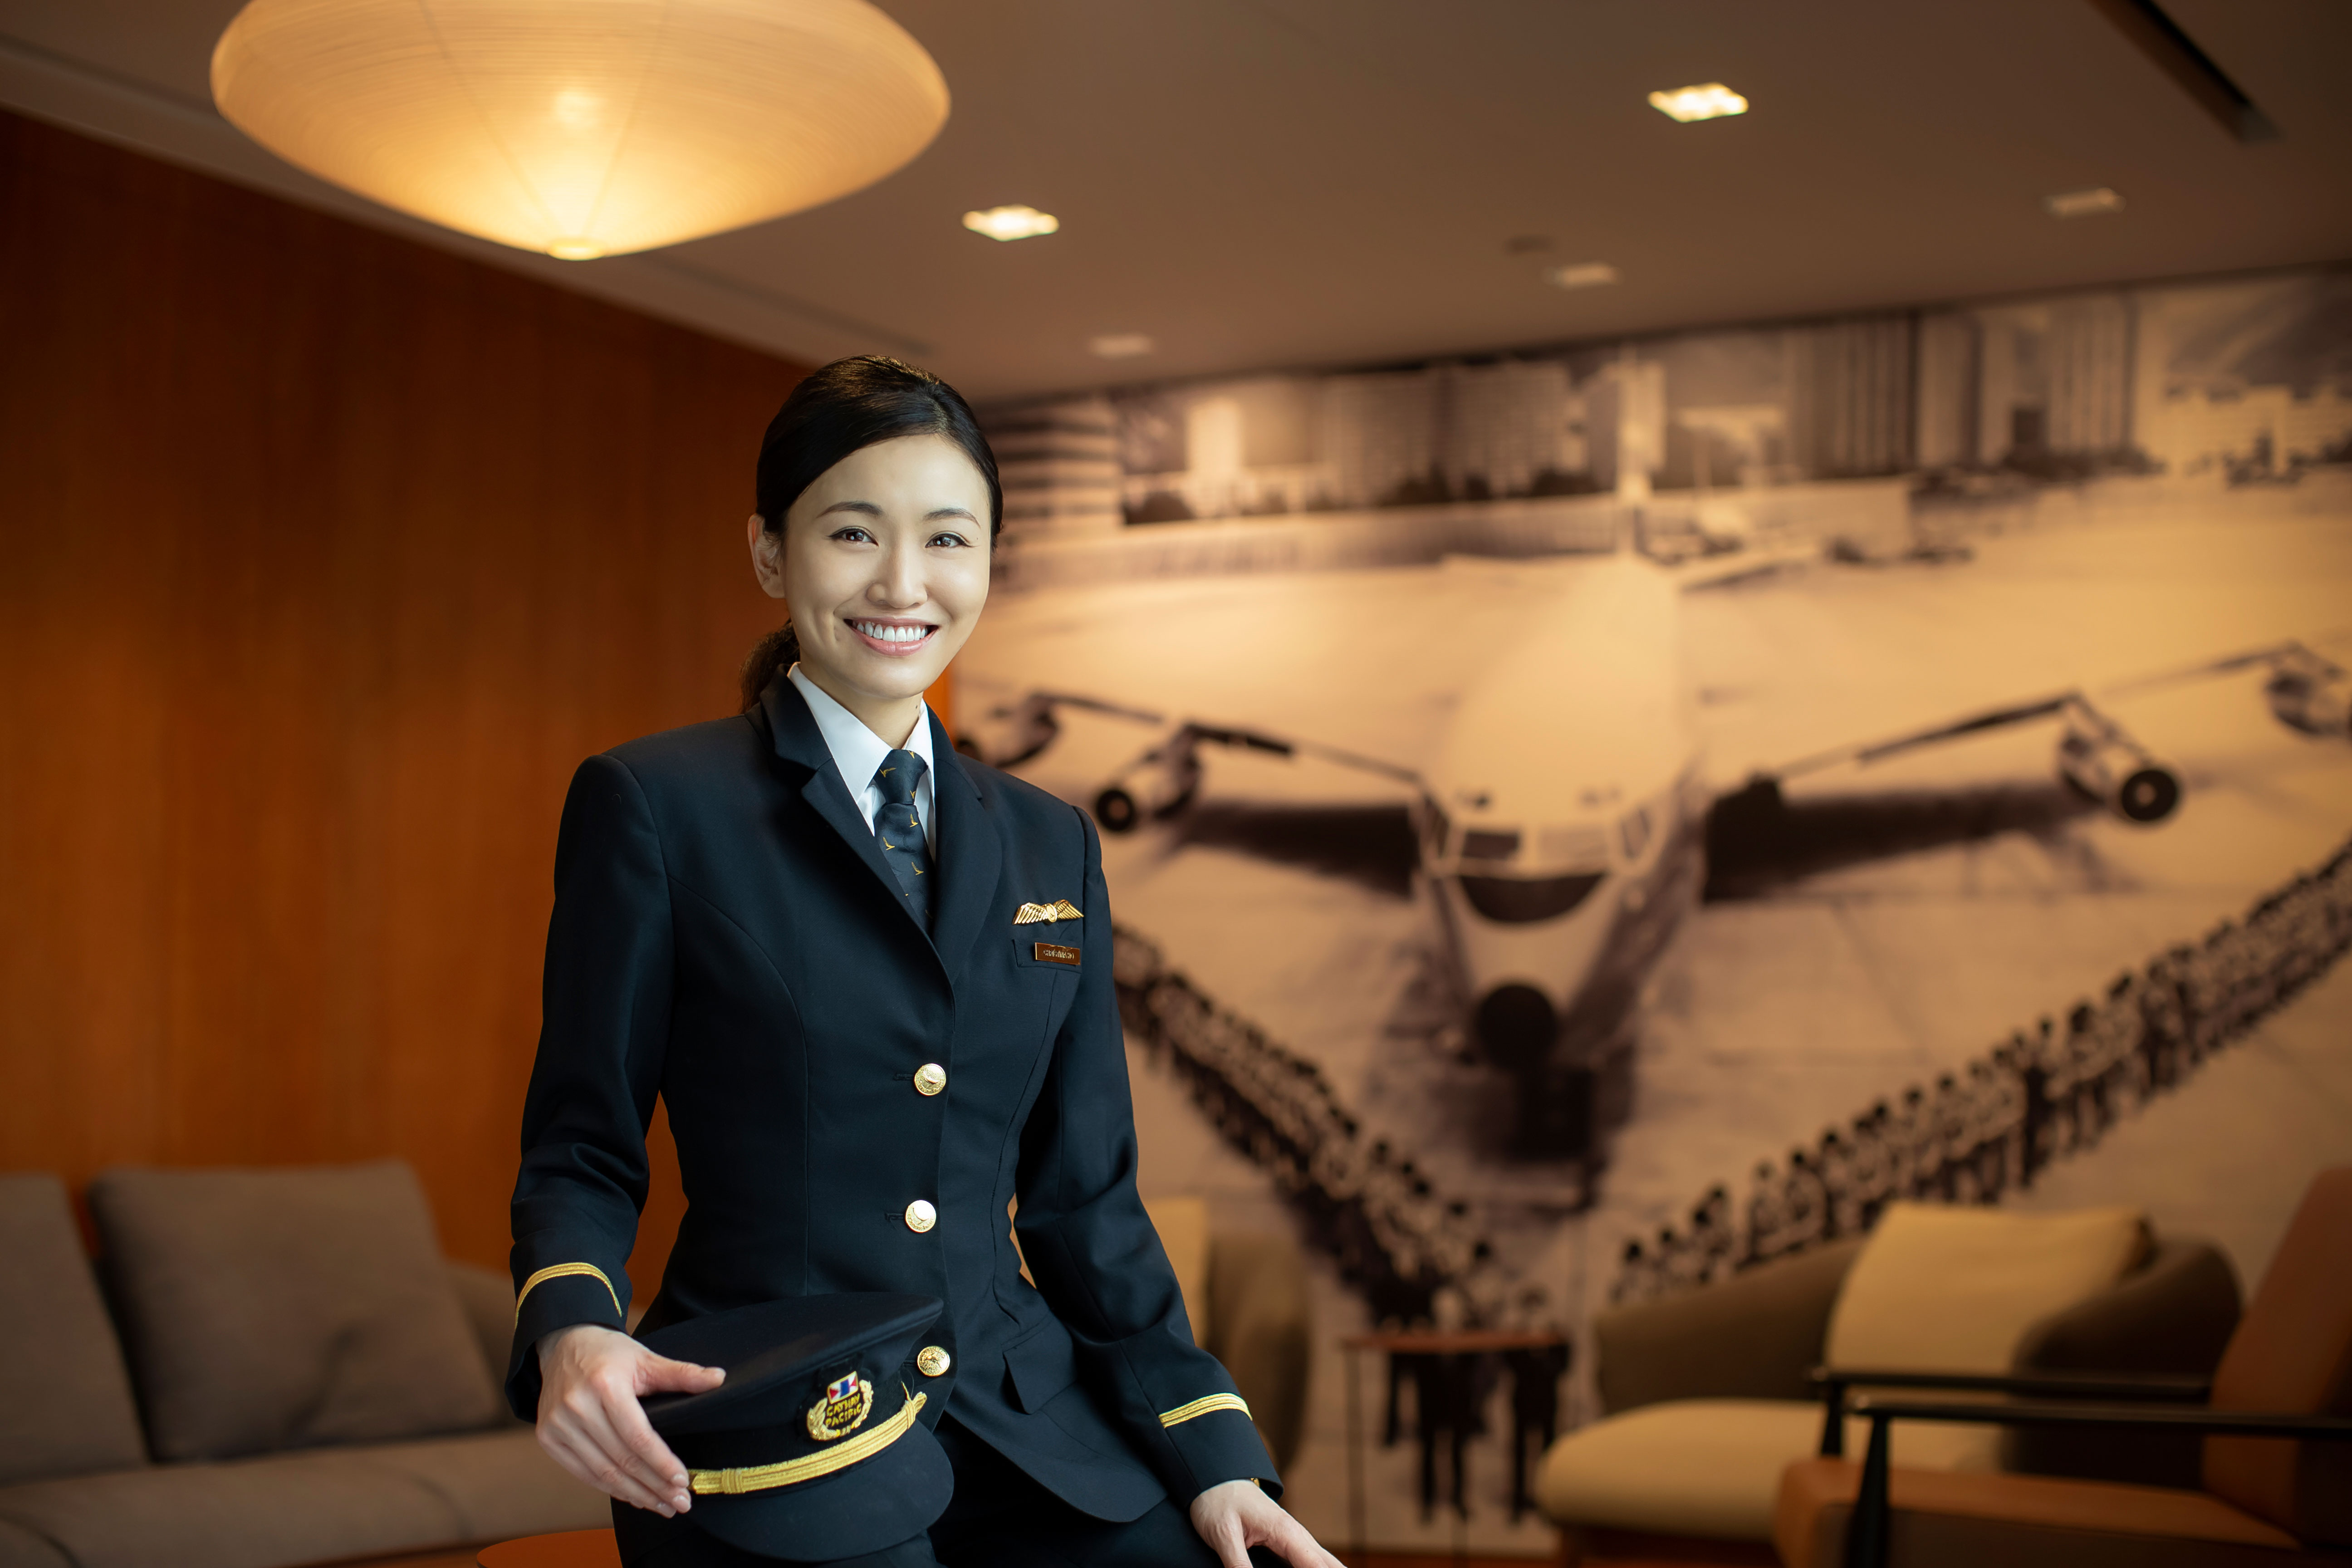 Christina已經任職機師四年，今天是民航客機的第二副機長